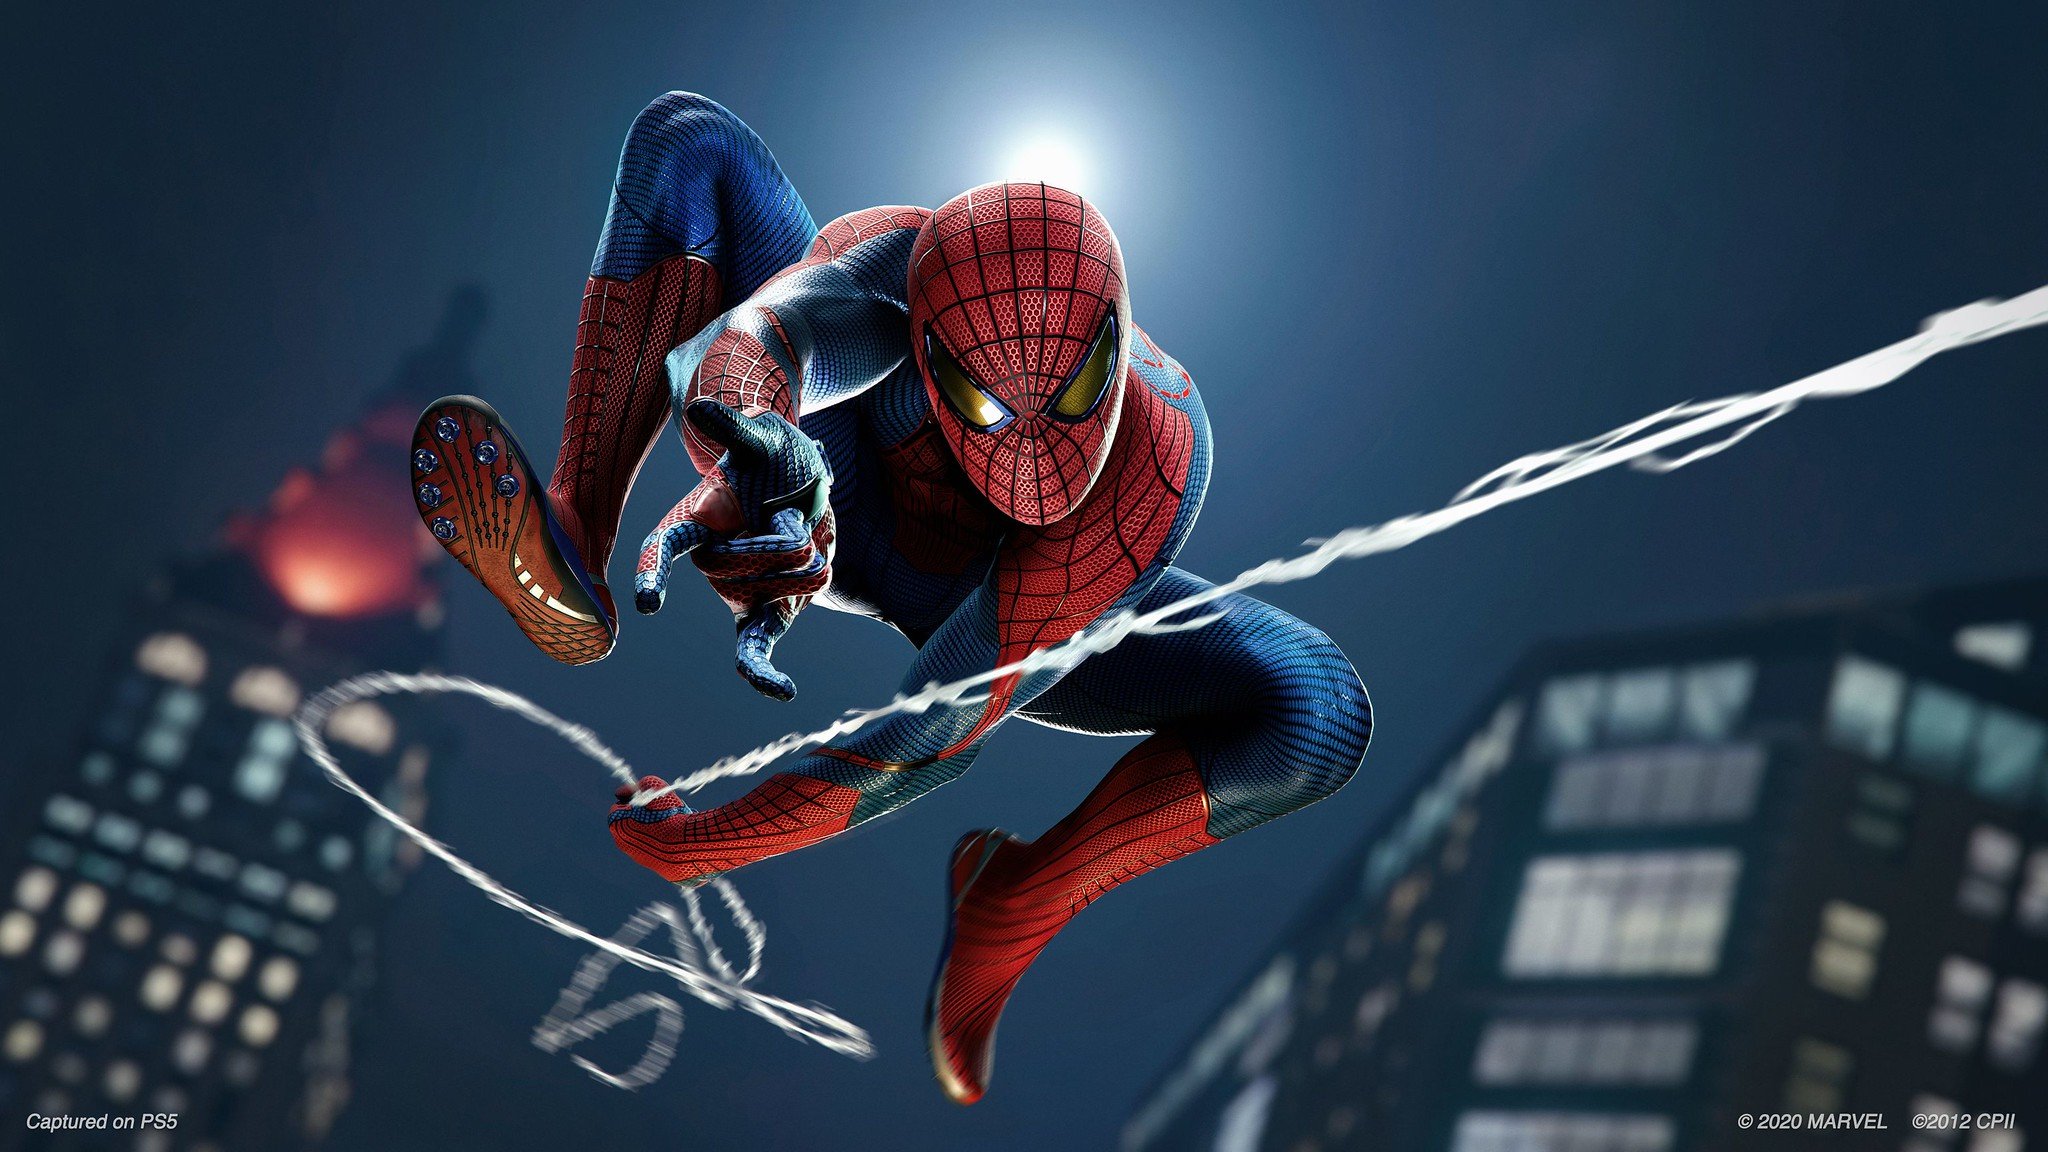 Marvel's Spider-Man 2 Release Date in September, per Tony Todd